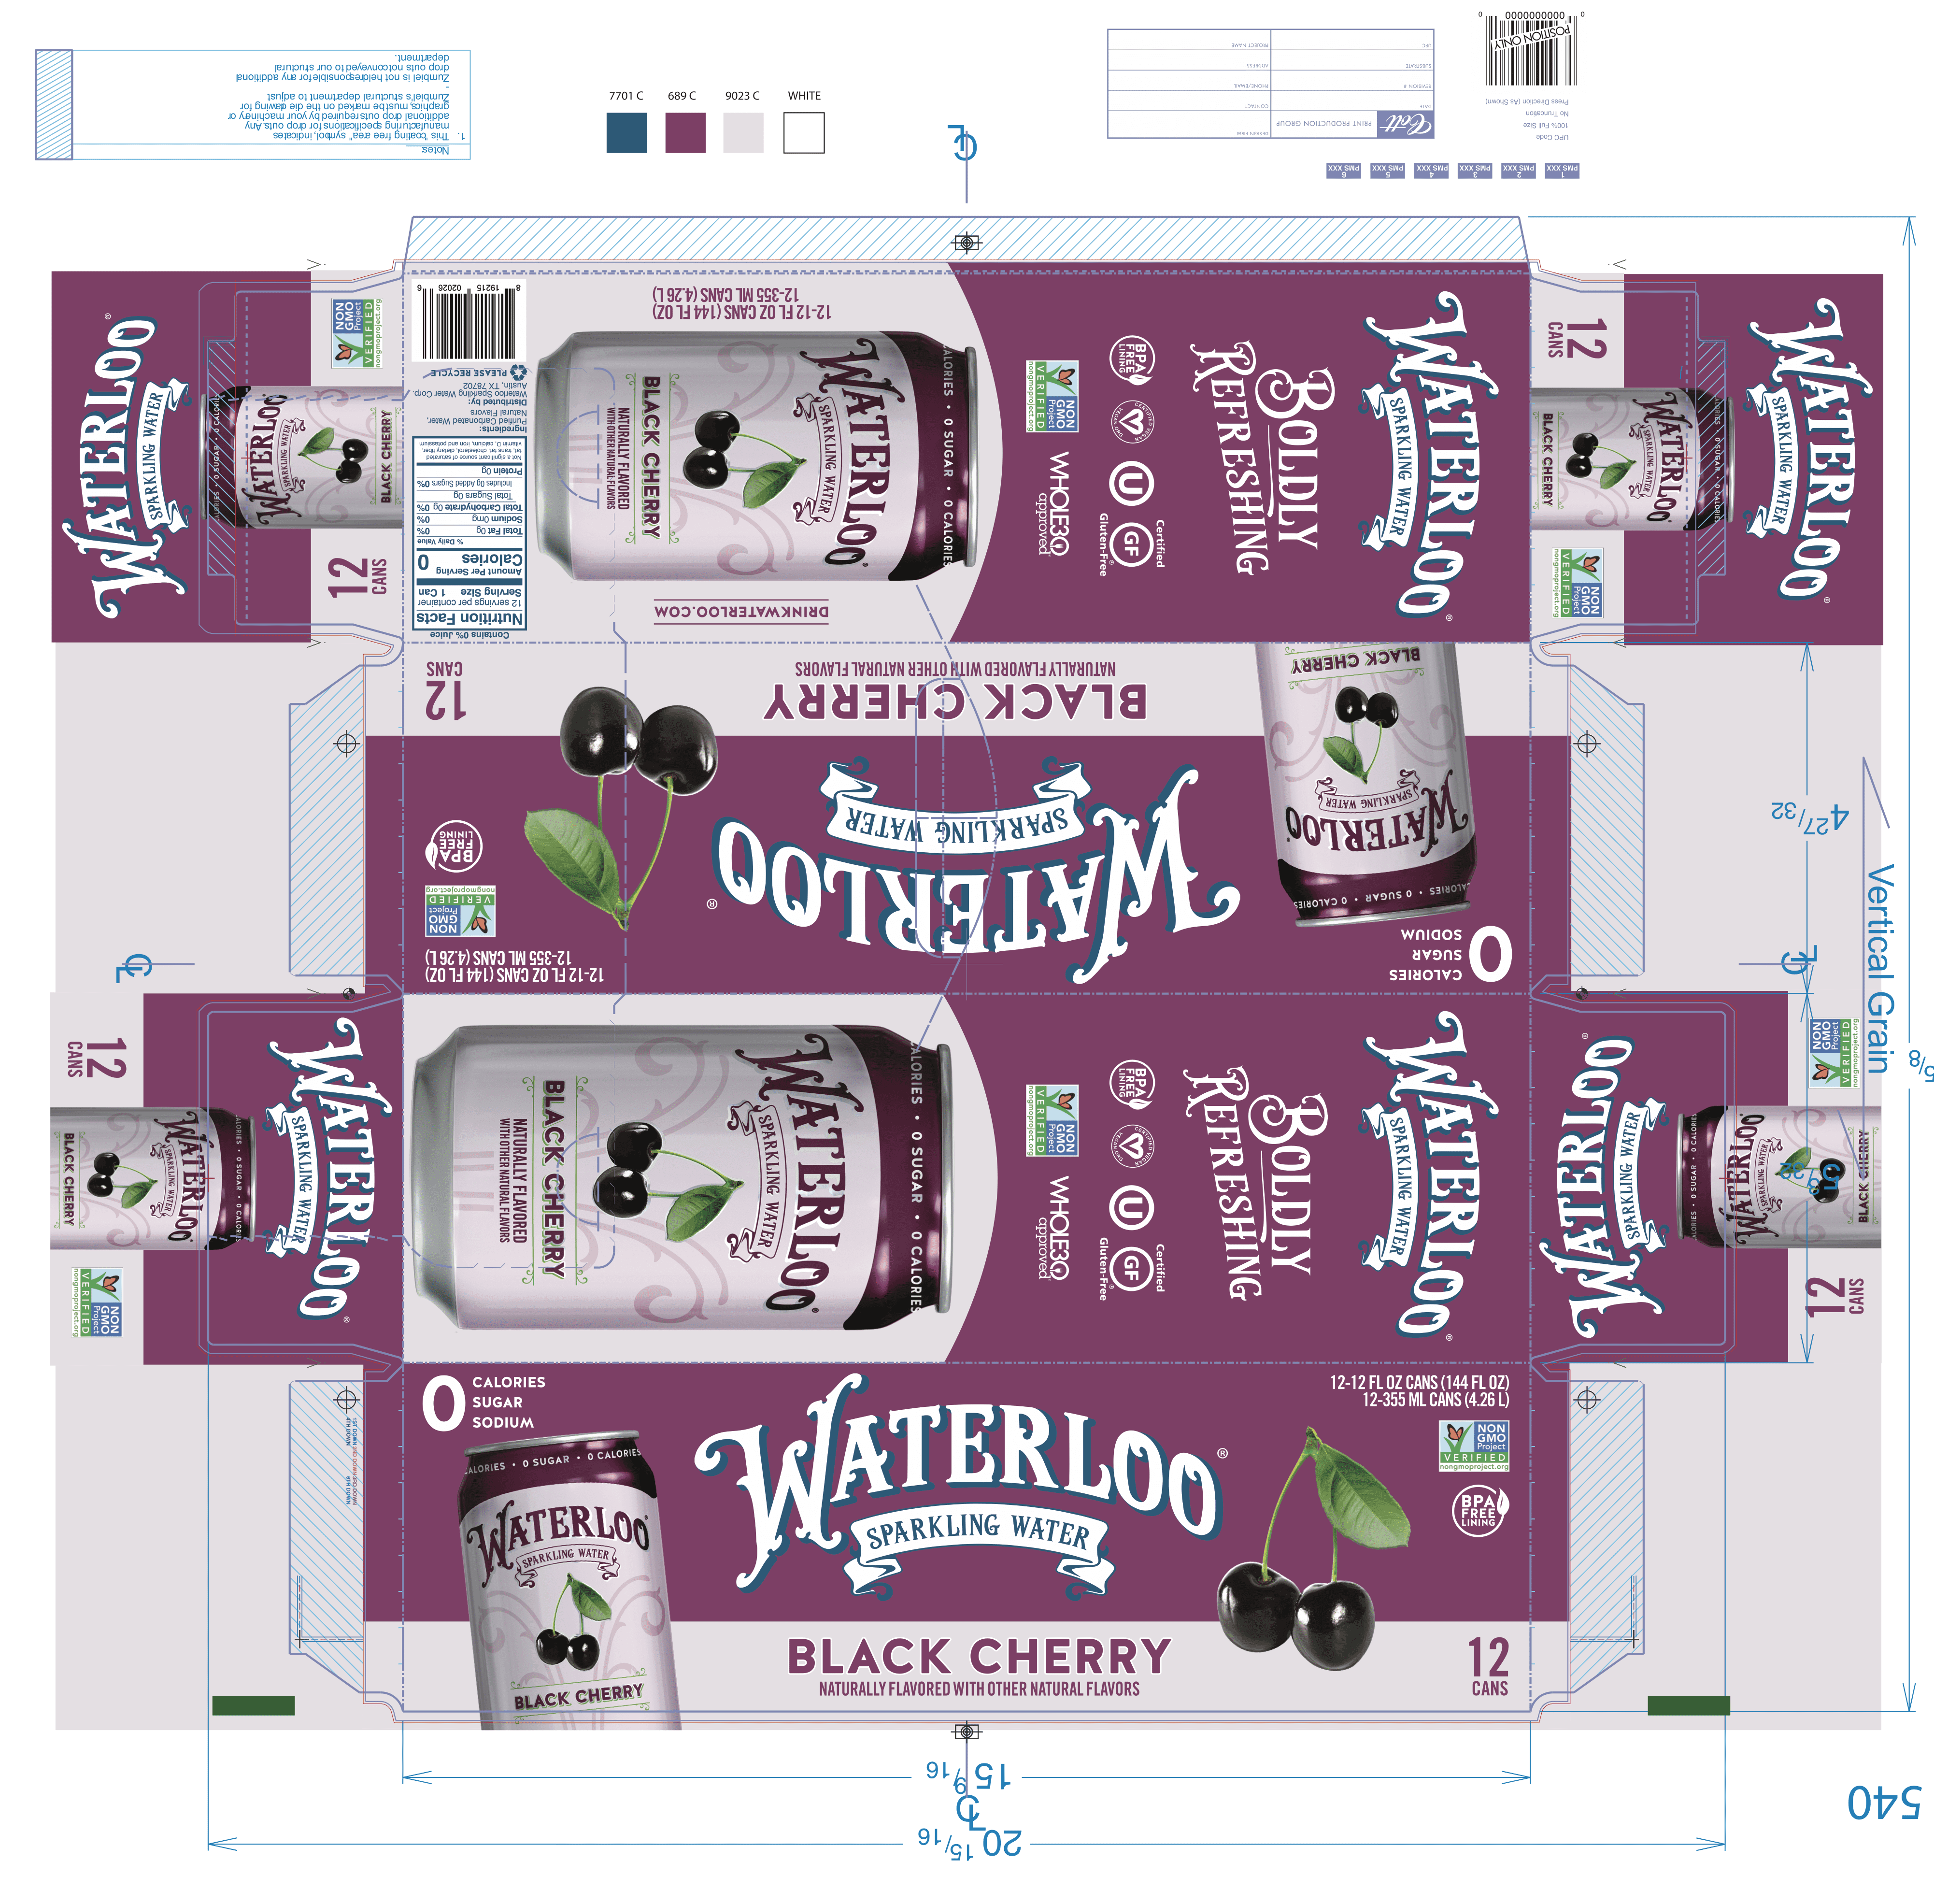 Waterloo Black Cherry Sparkling Water 2 innerpacks per case 144.0 fl Product Label